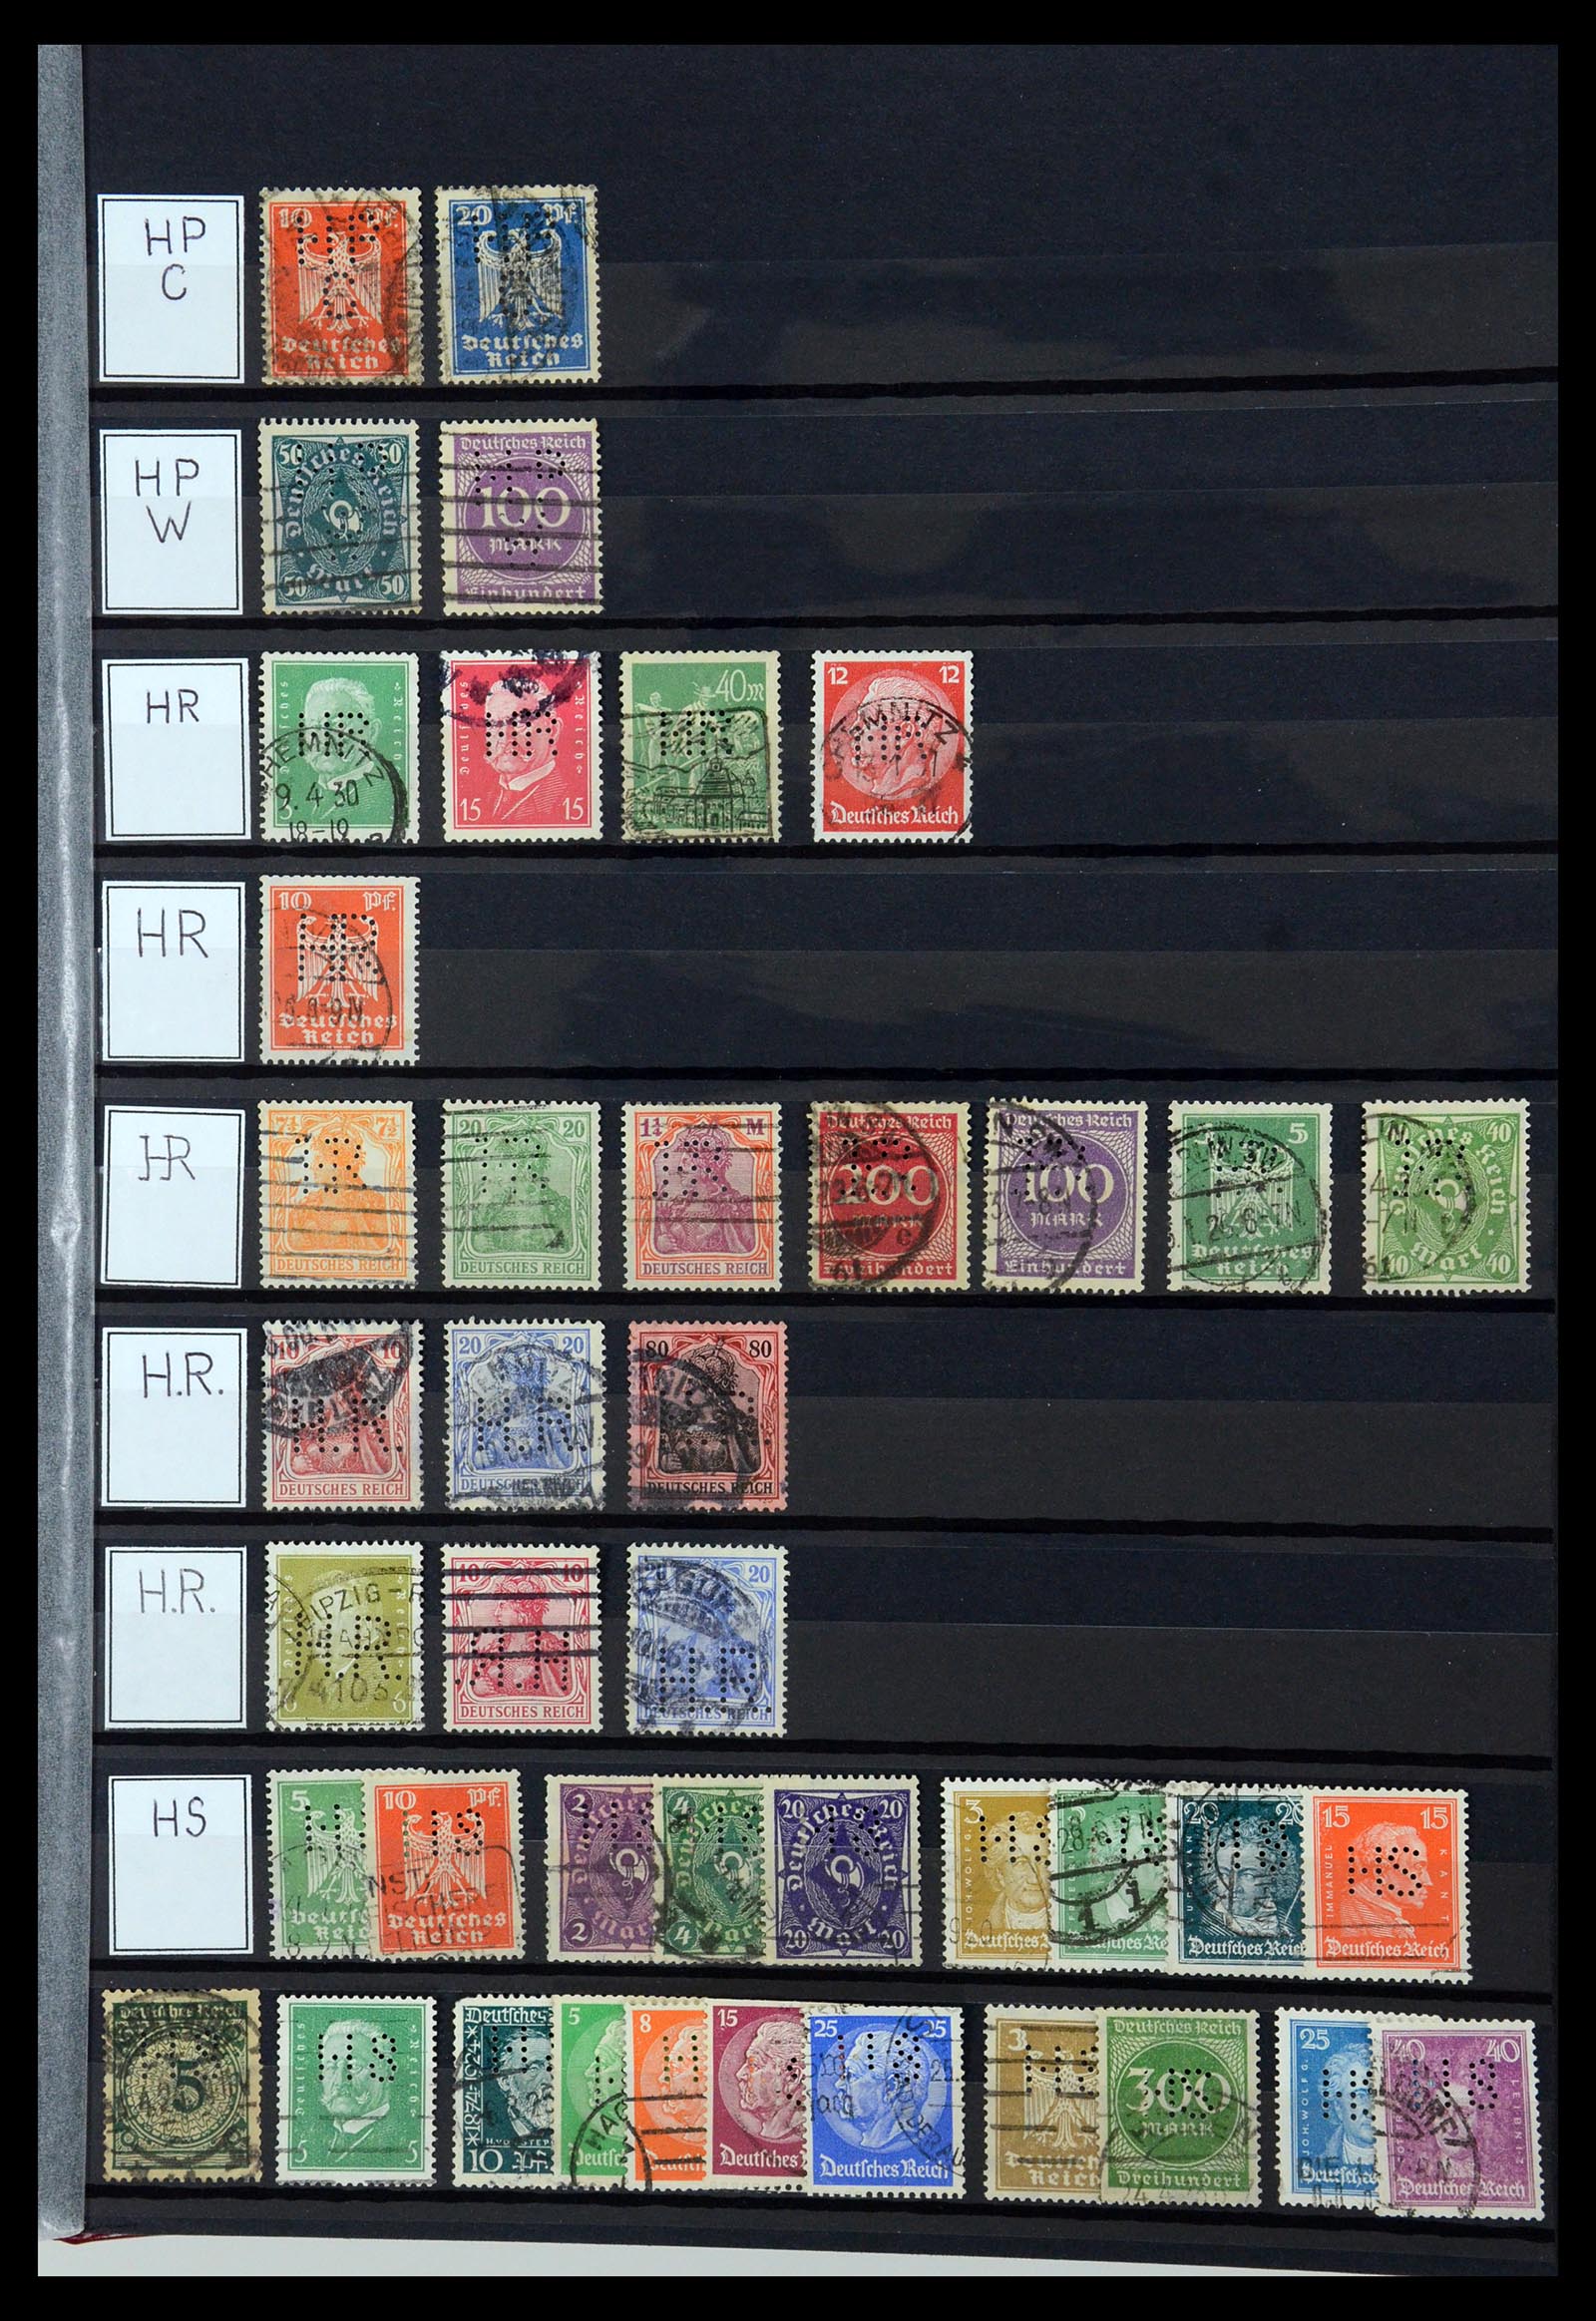 36405 175 - Postzegelverzameling 36405 Duitse Rijk perfins 1880-1945.